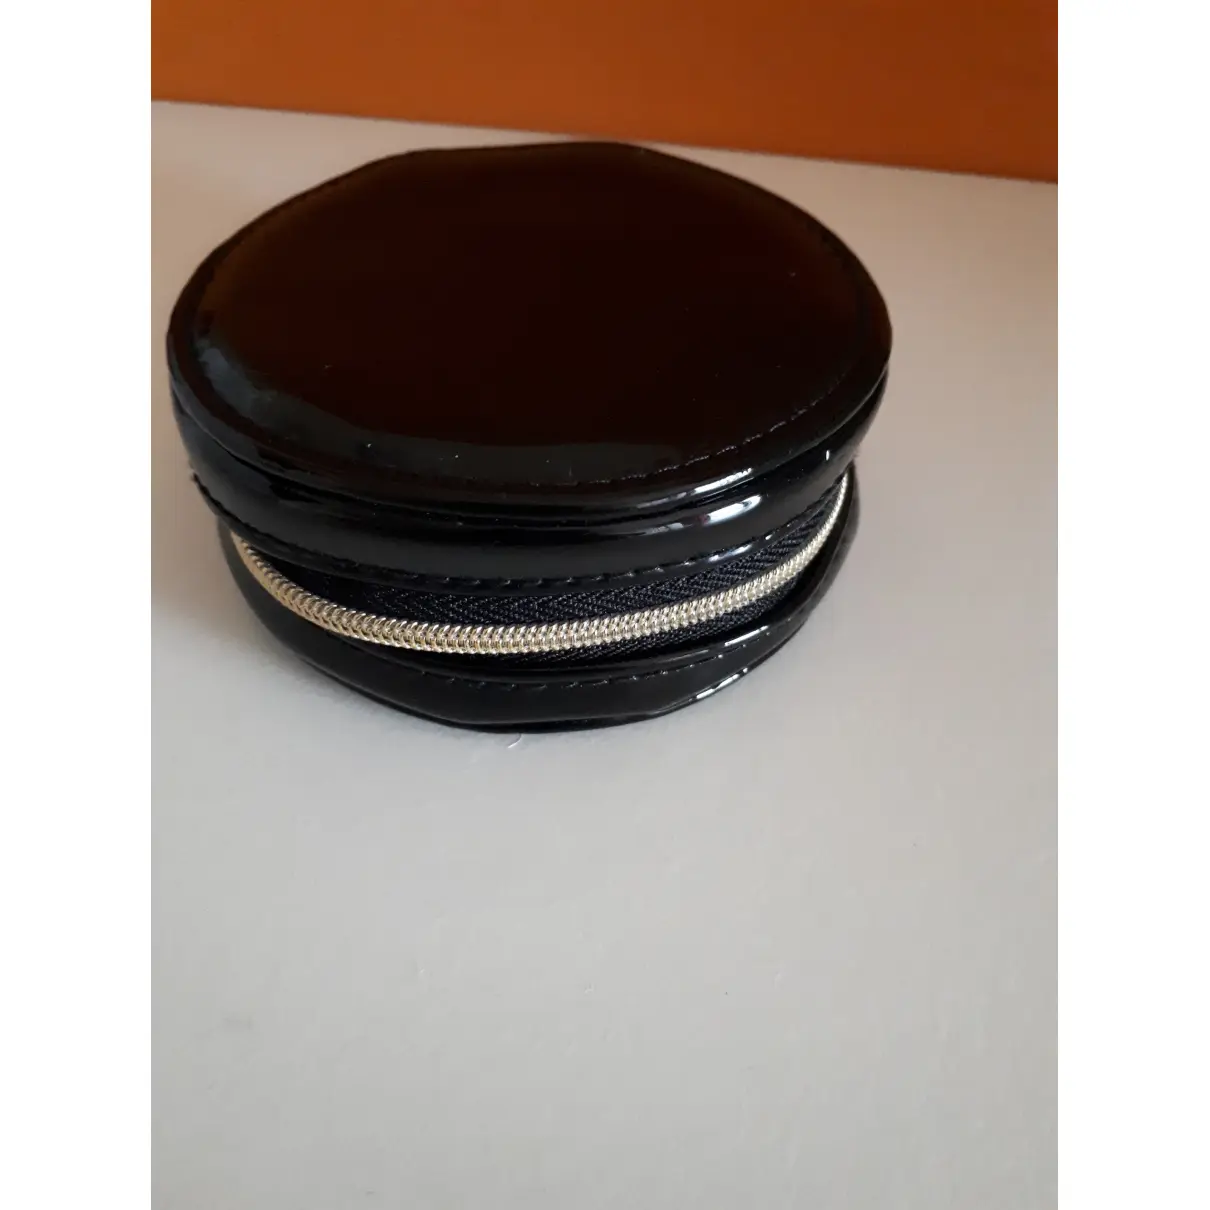 Buy Yves Saint Laurent Patent leather purse online